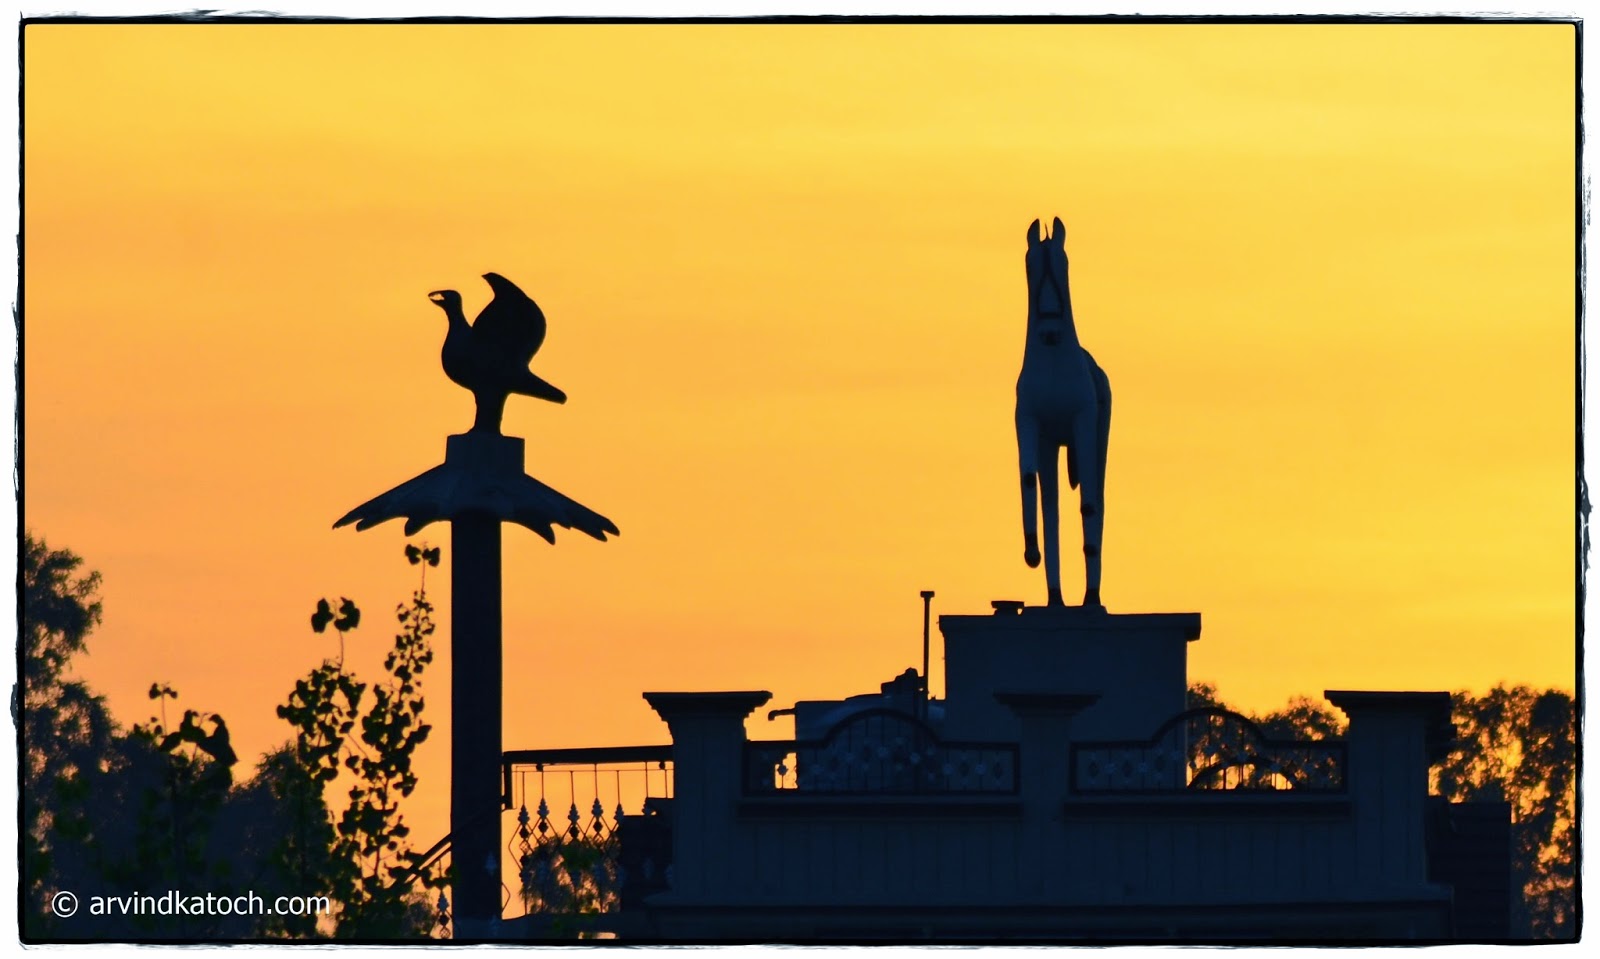 Statue, Eage, Horse, Home, Top, Punjab, Evening, Sunlight